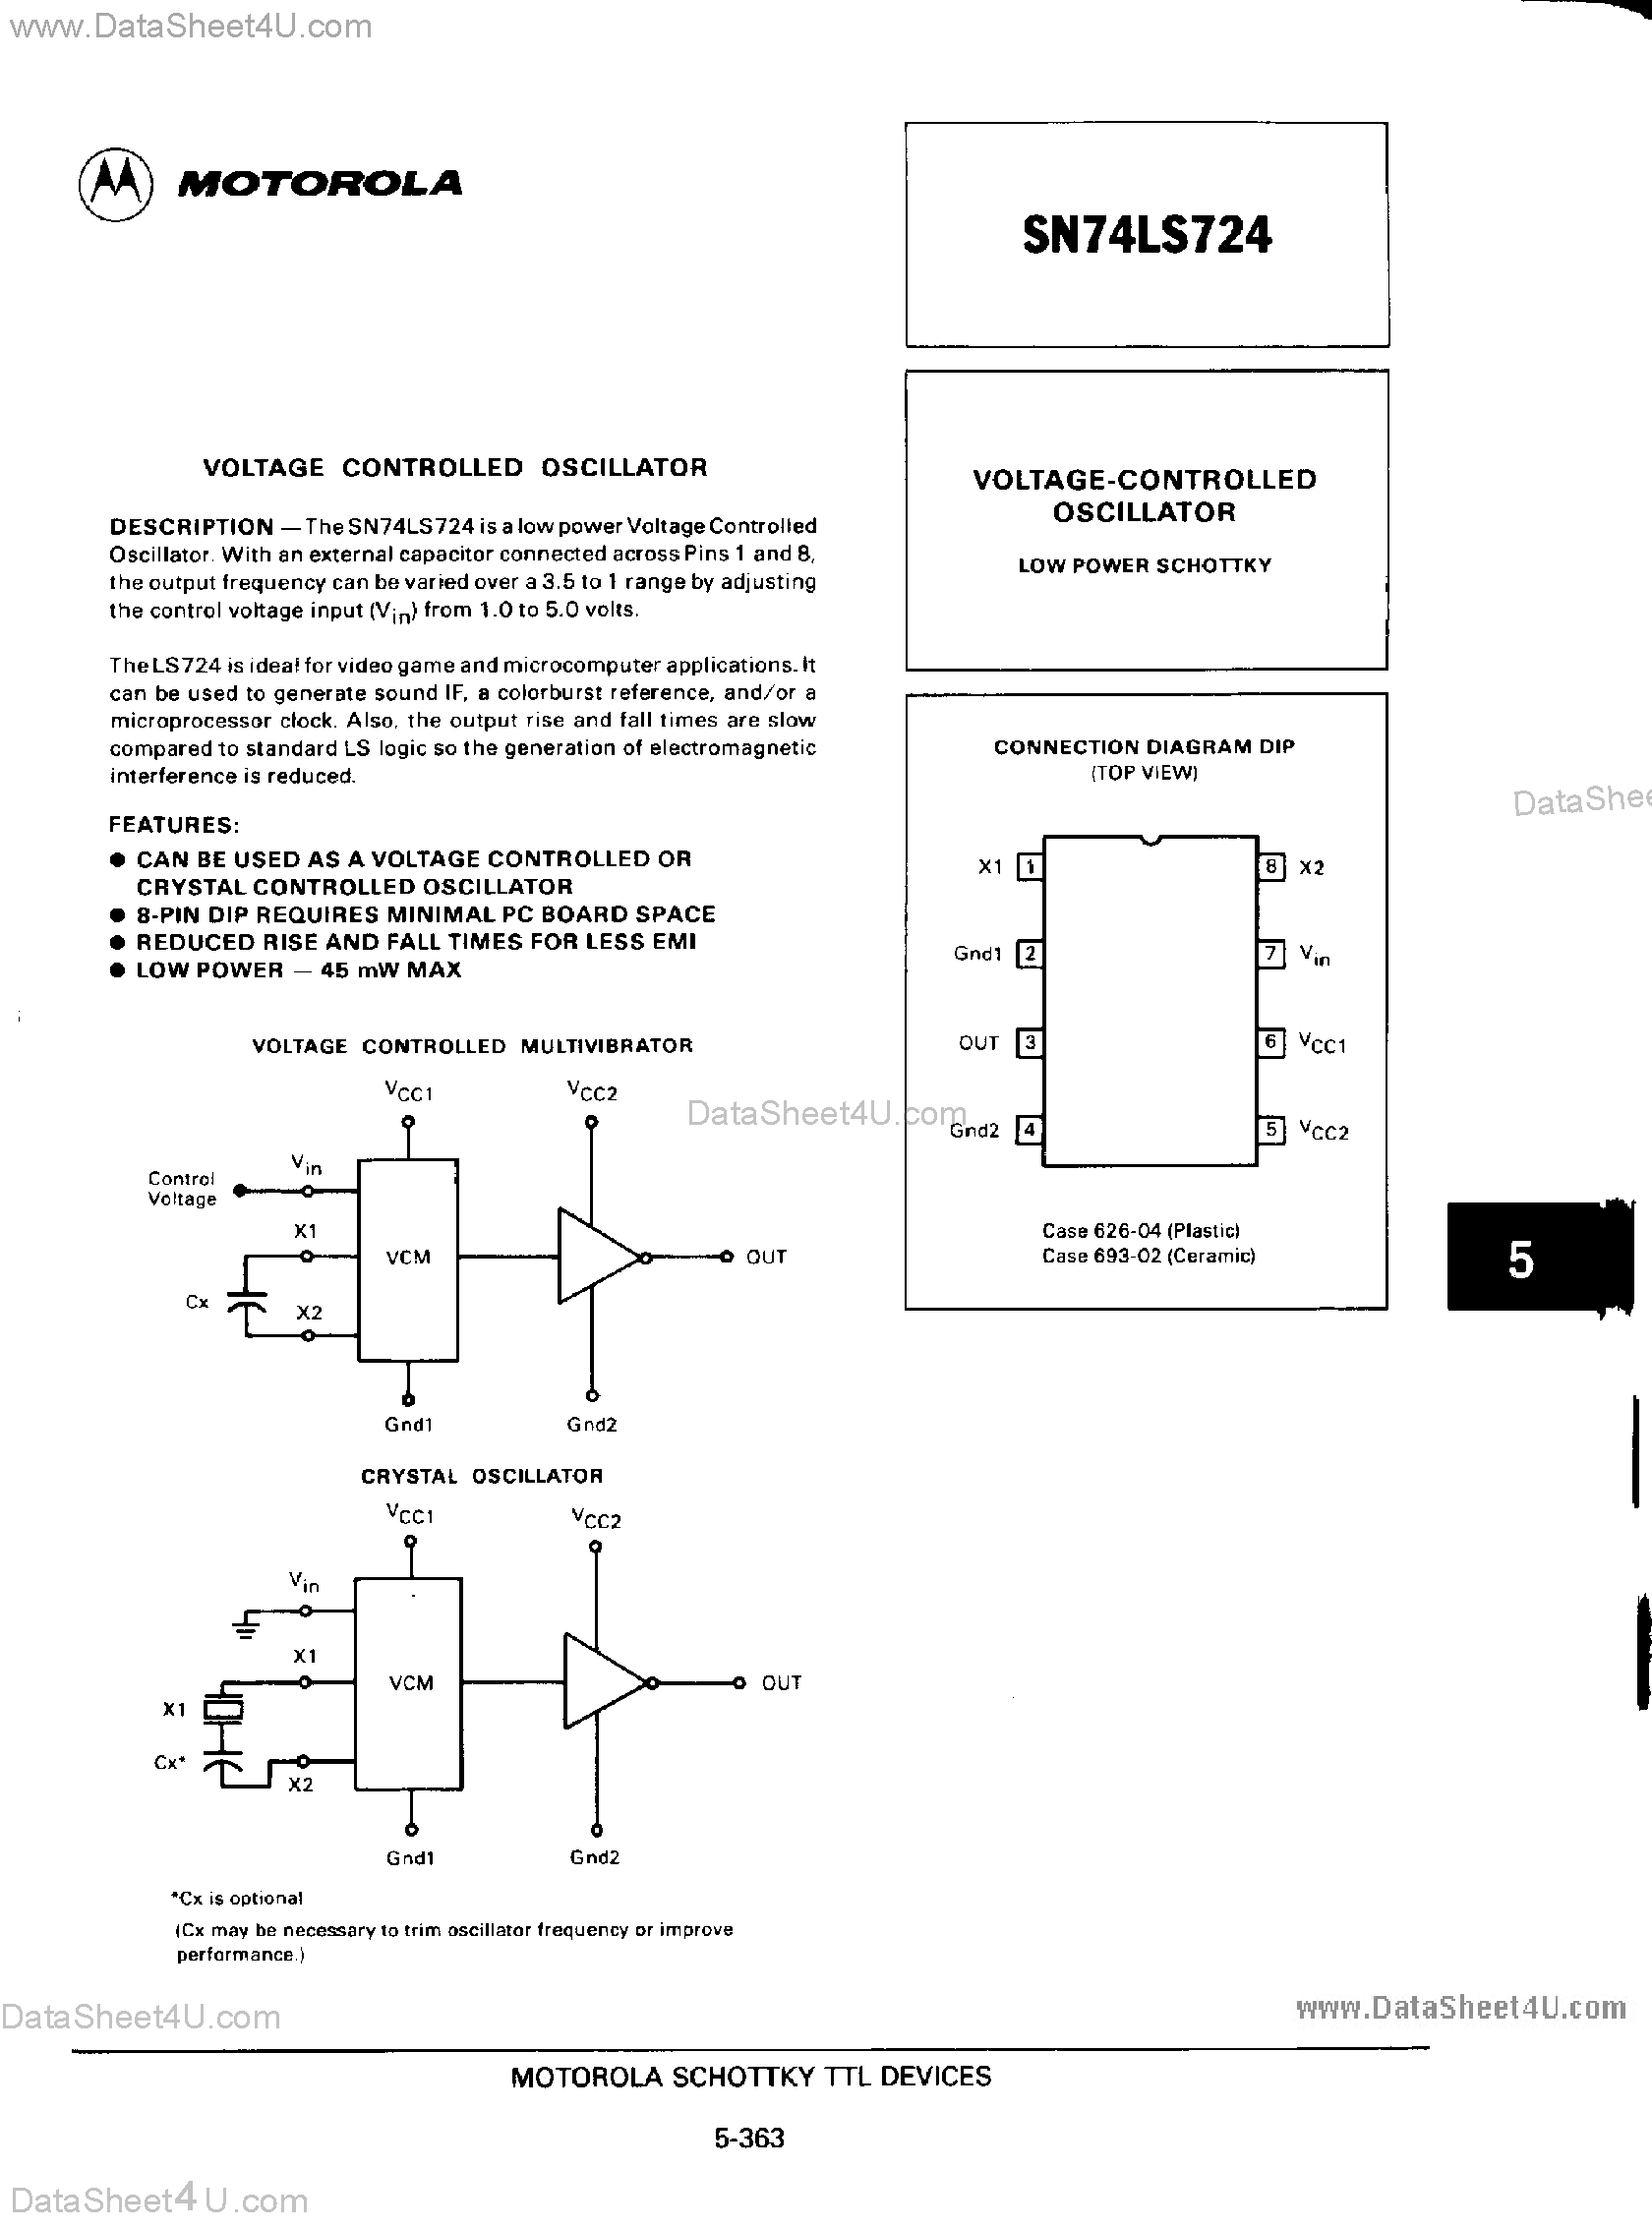 Даташит SN74LS724 - Voltage Controlled Oscillator страница 1